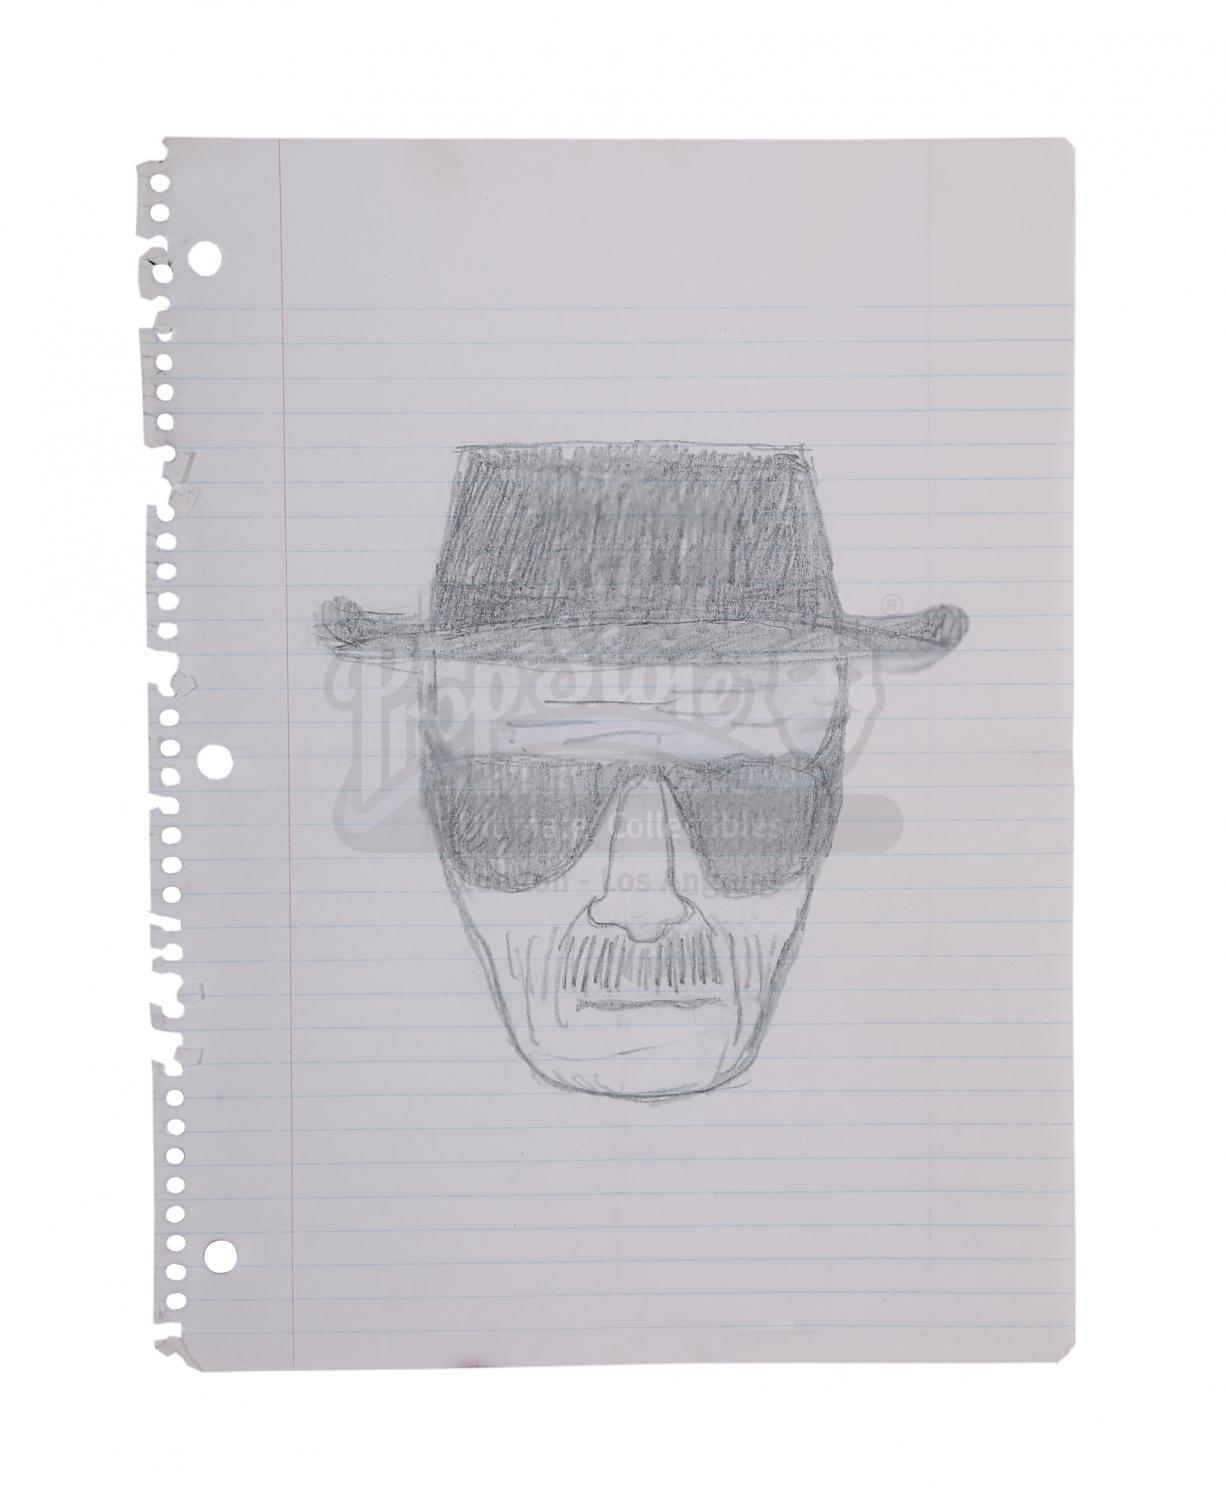 Walter White - Breaking Bad Heisenberg Drawing by ArKaNGL300 on DeviantArt